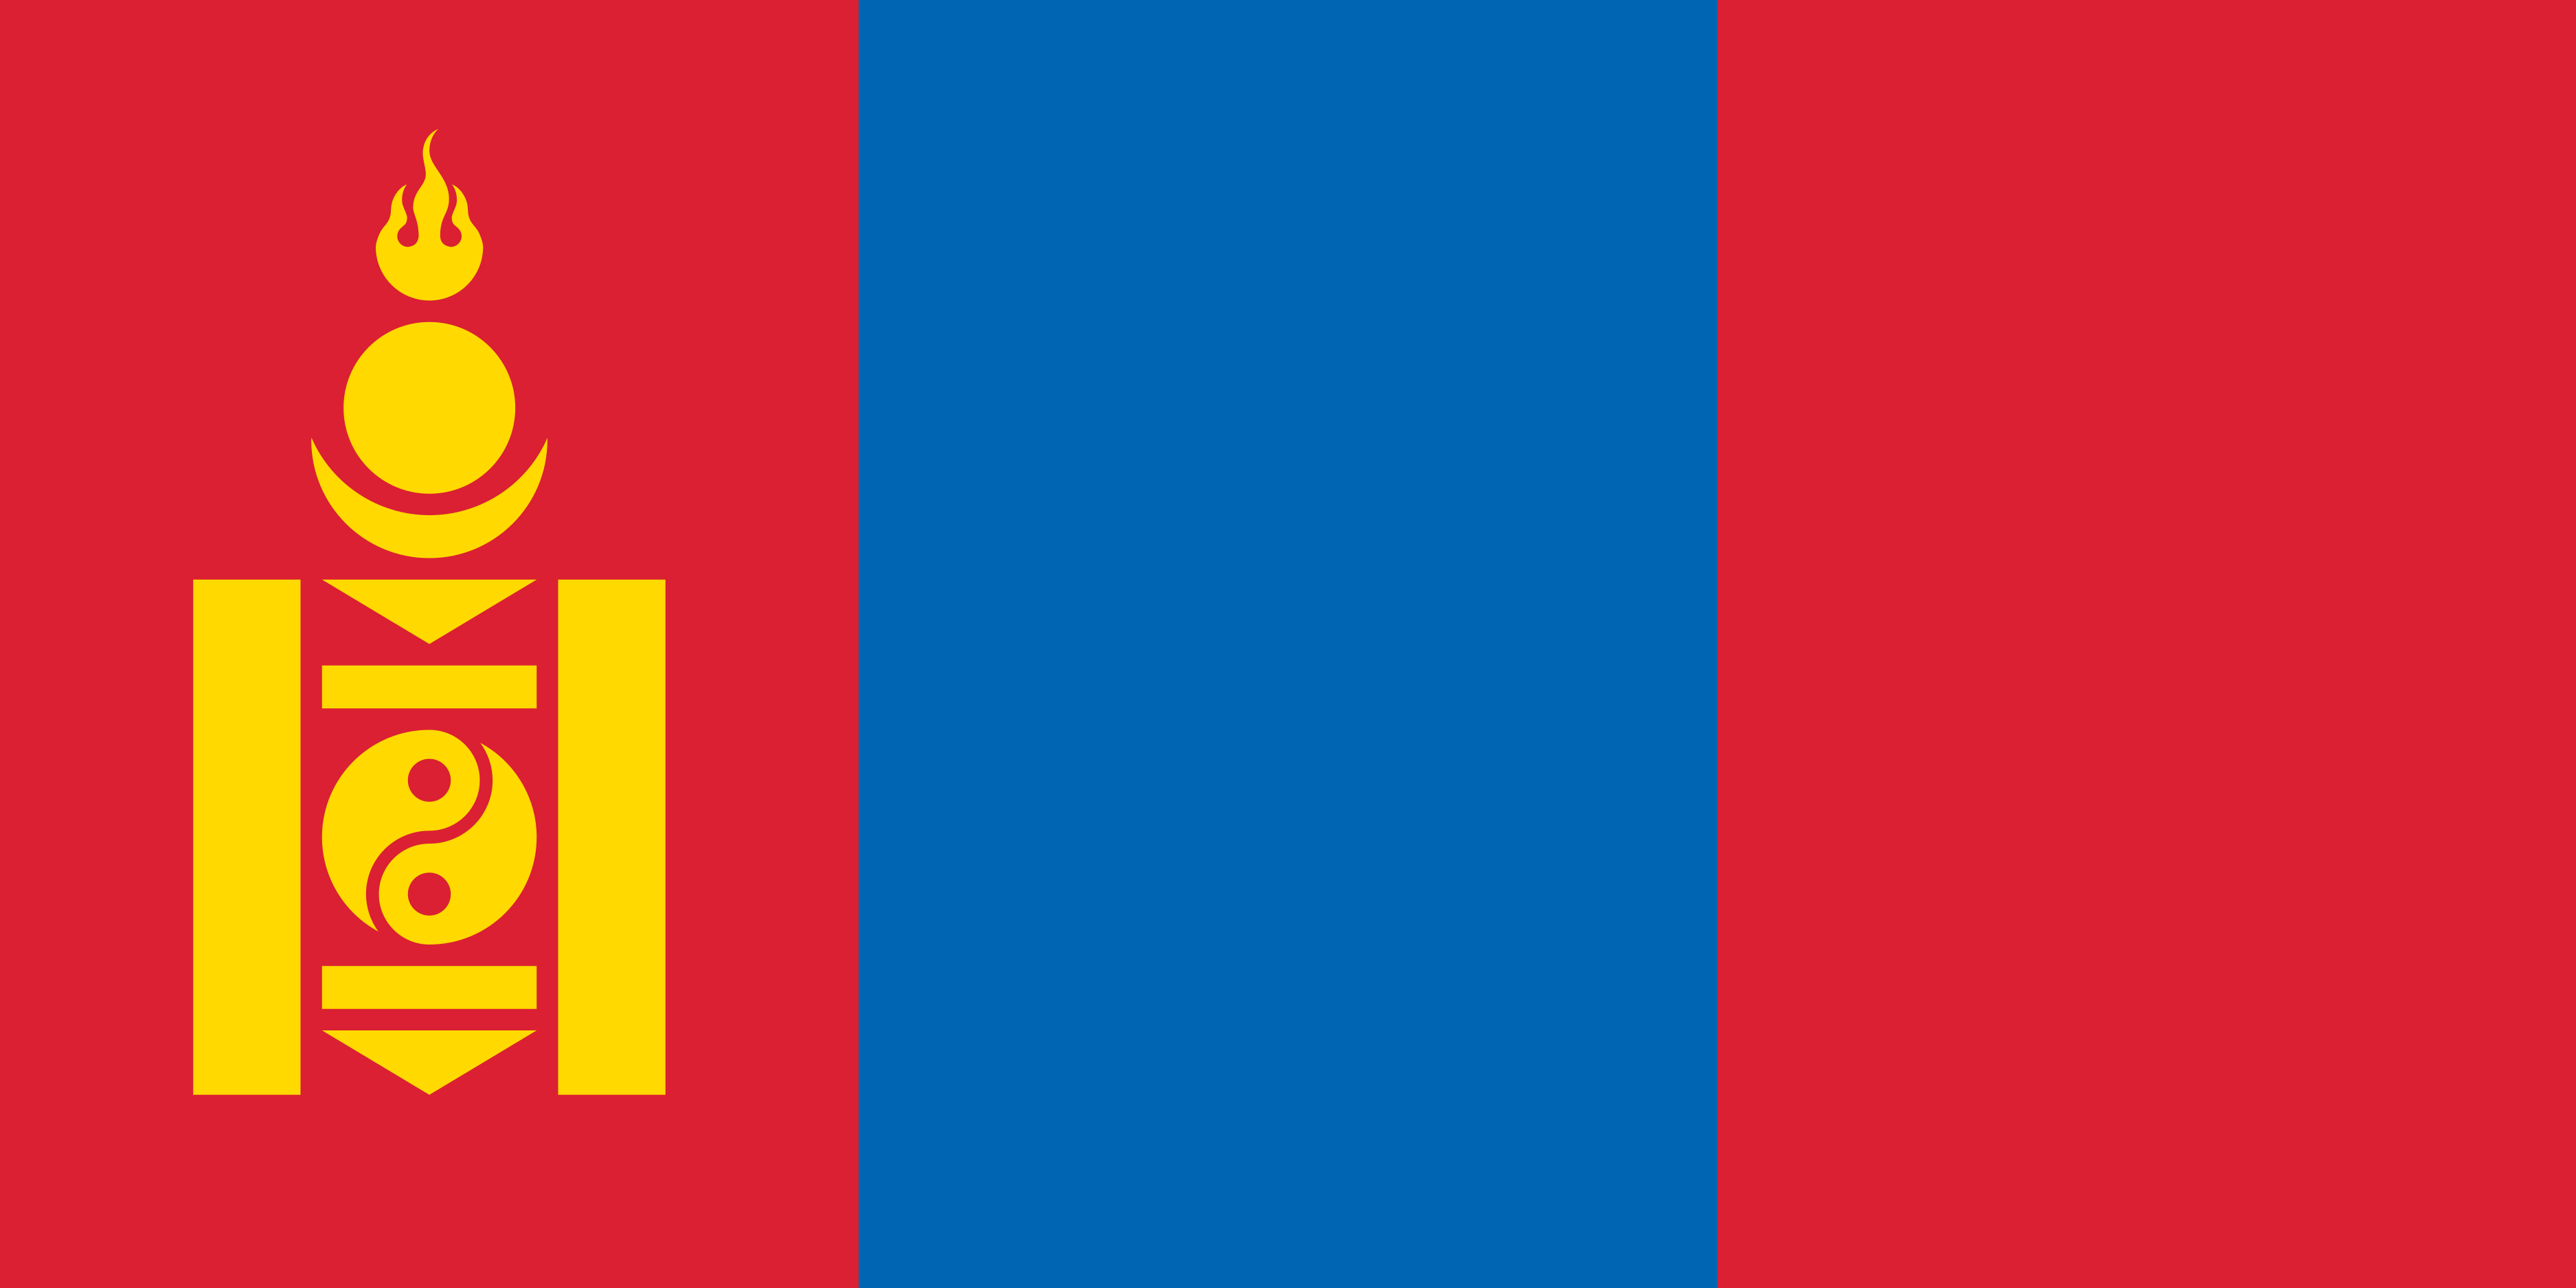 Mongolia Flag Image - Free Download